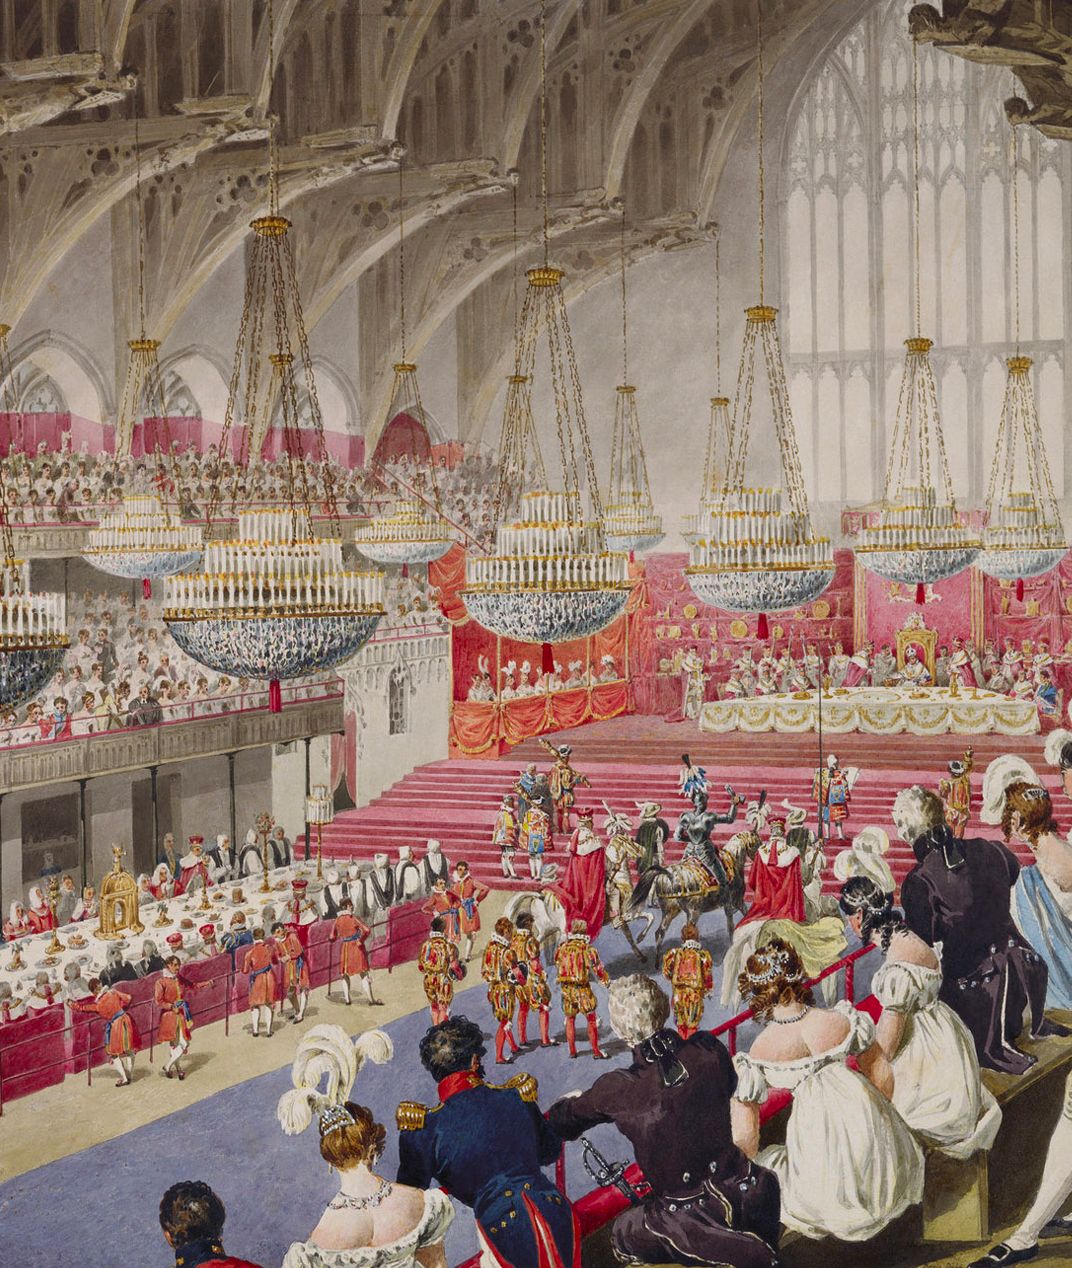 King's champion at George IV's coronation